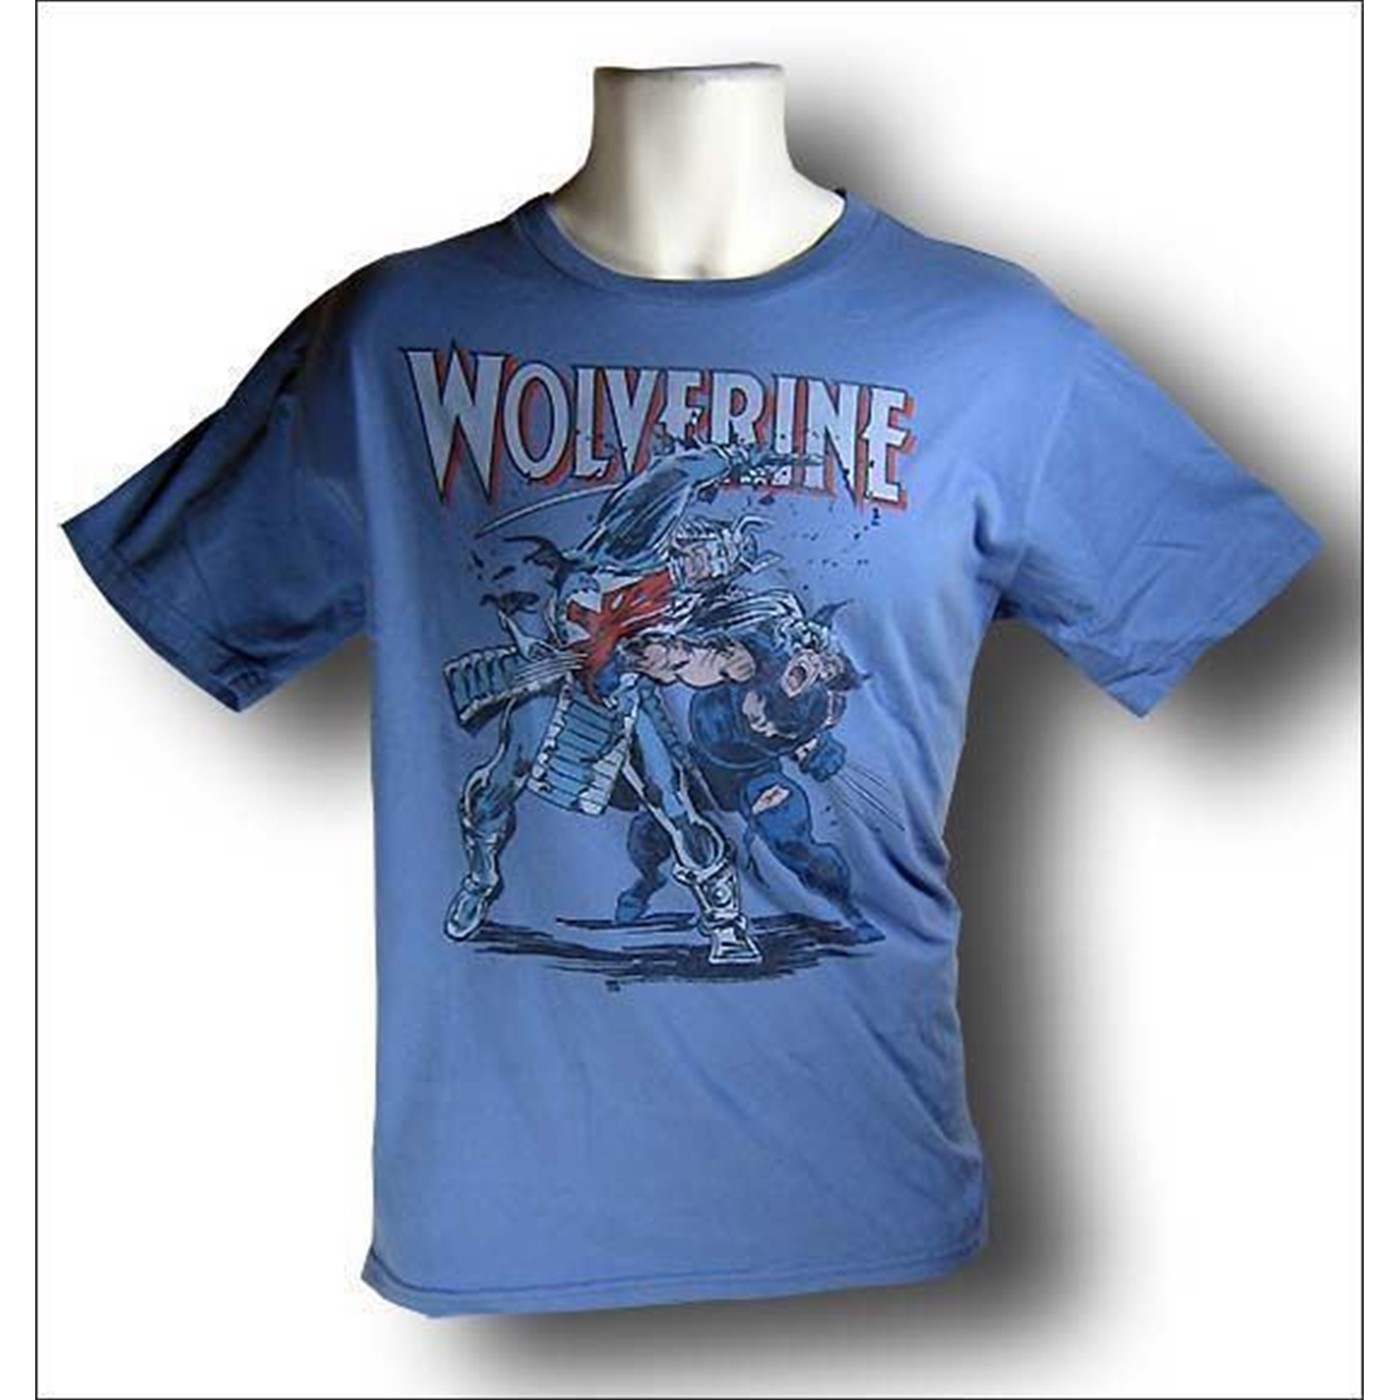 Wolverine T-Shirt Silver Samurai by Junk Food